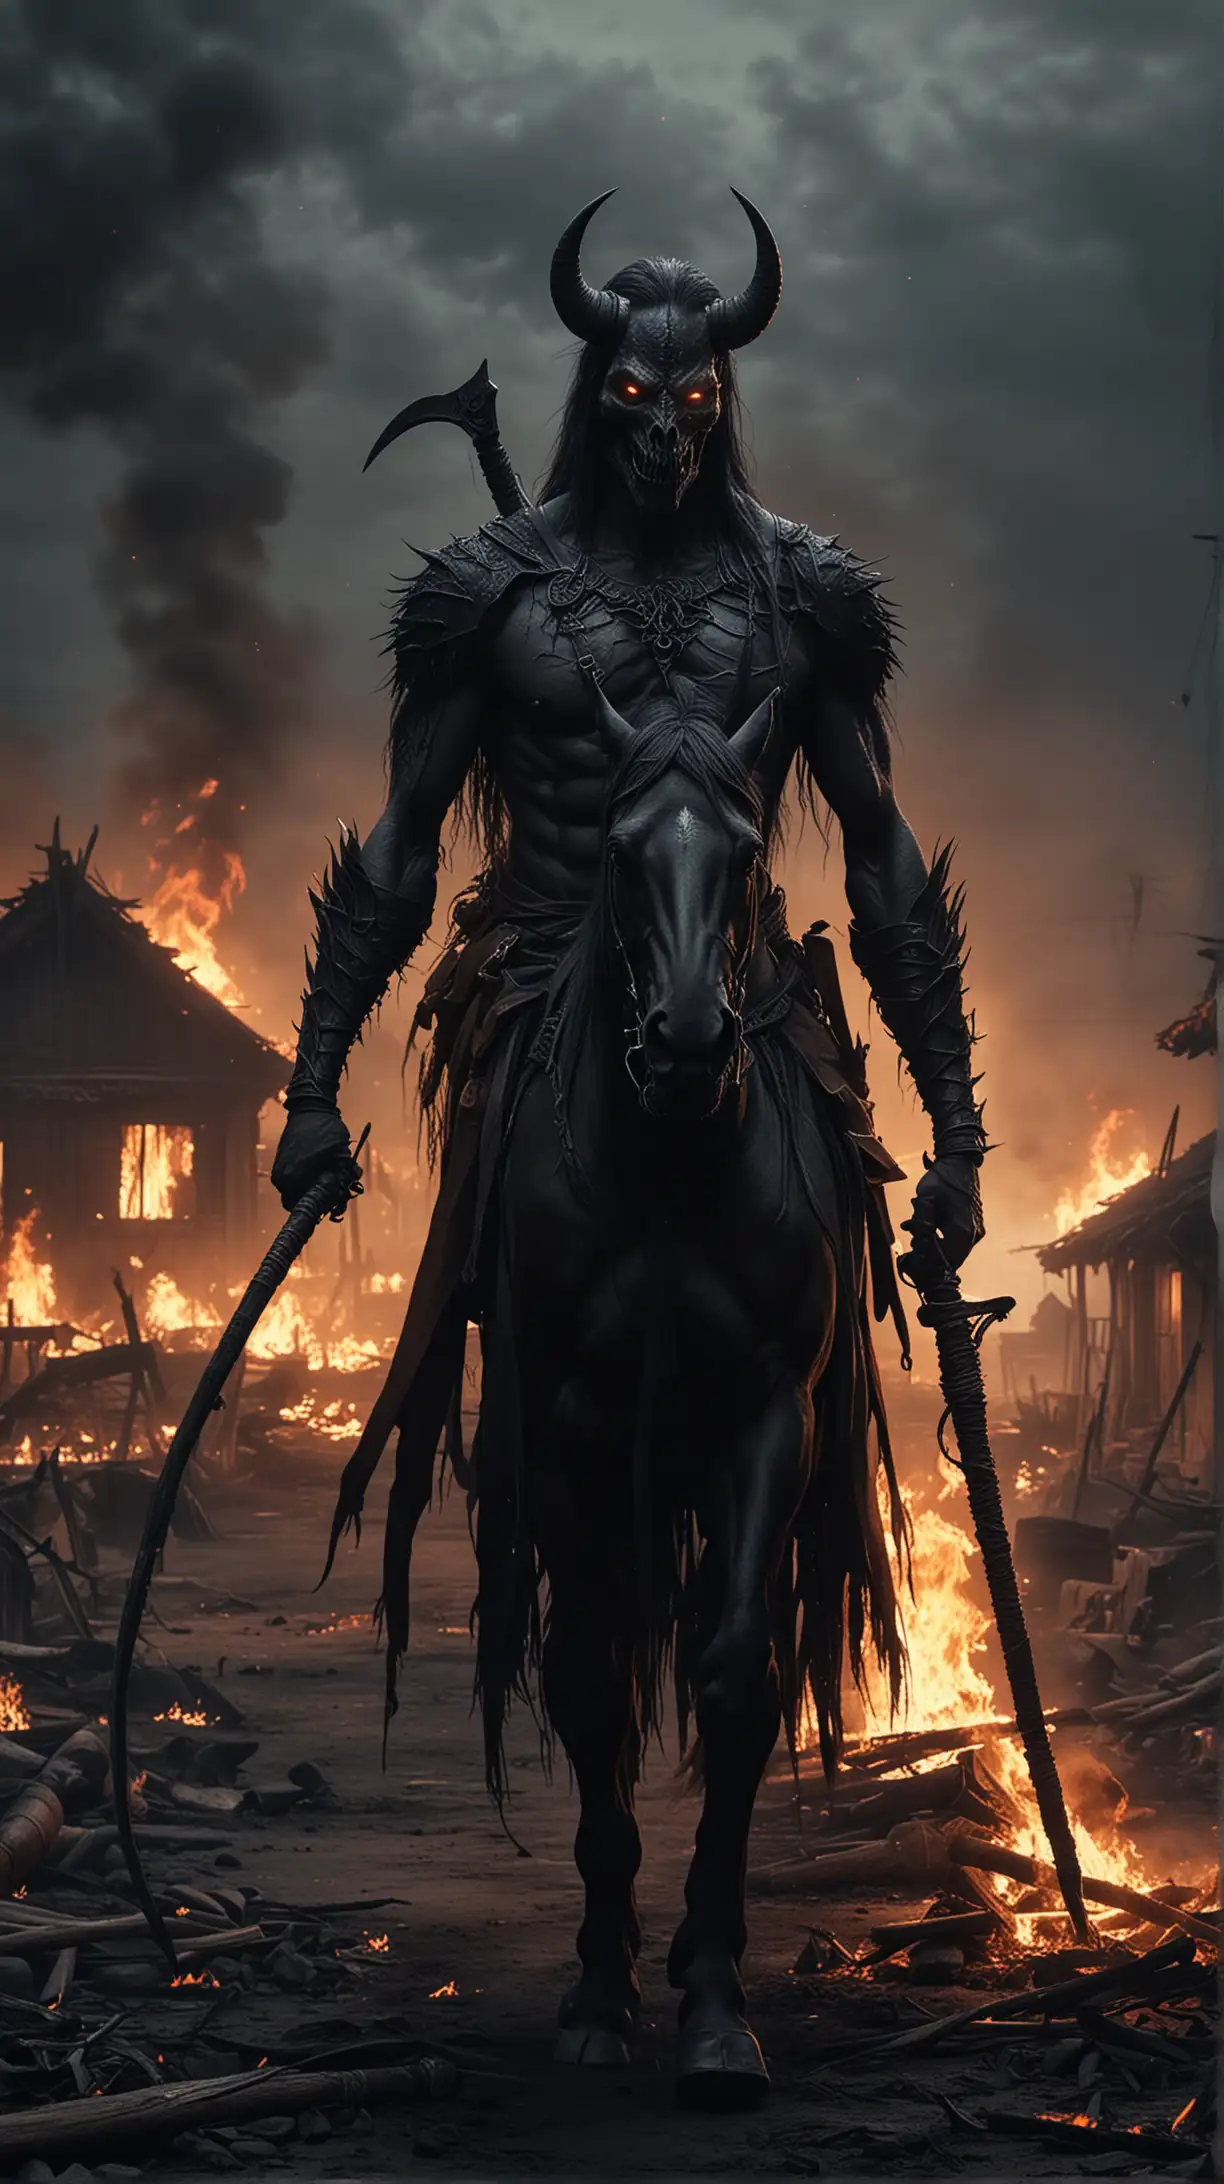 Sinister HalfHuman HalfHorse Demon Wielding Scythe in Burning Village